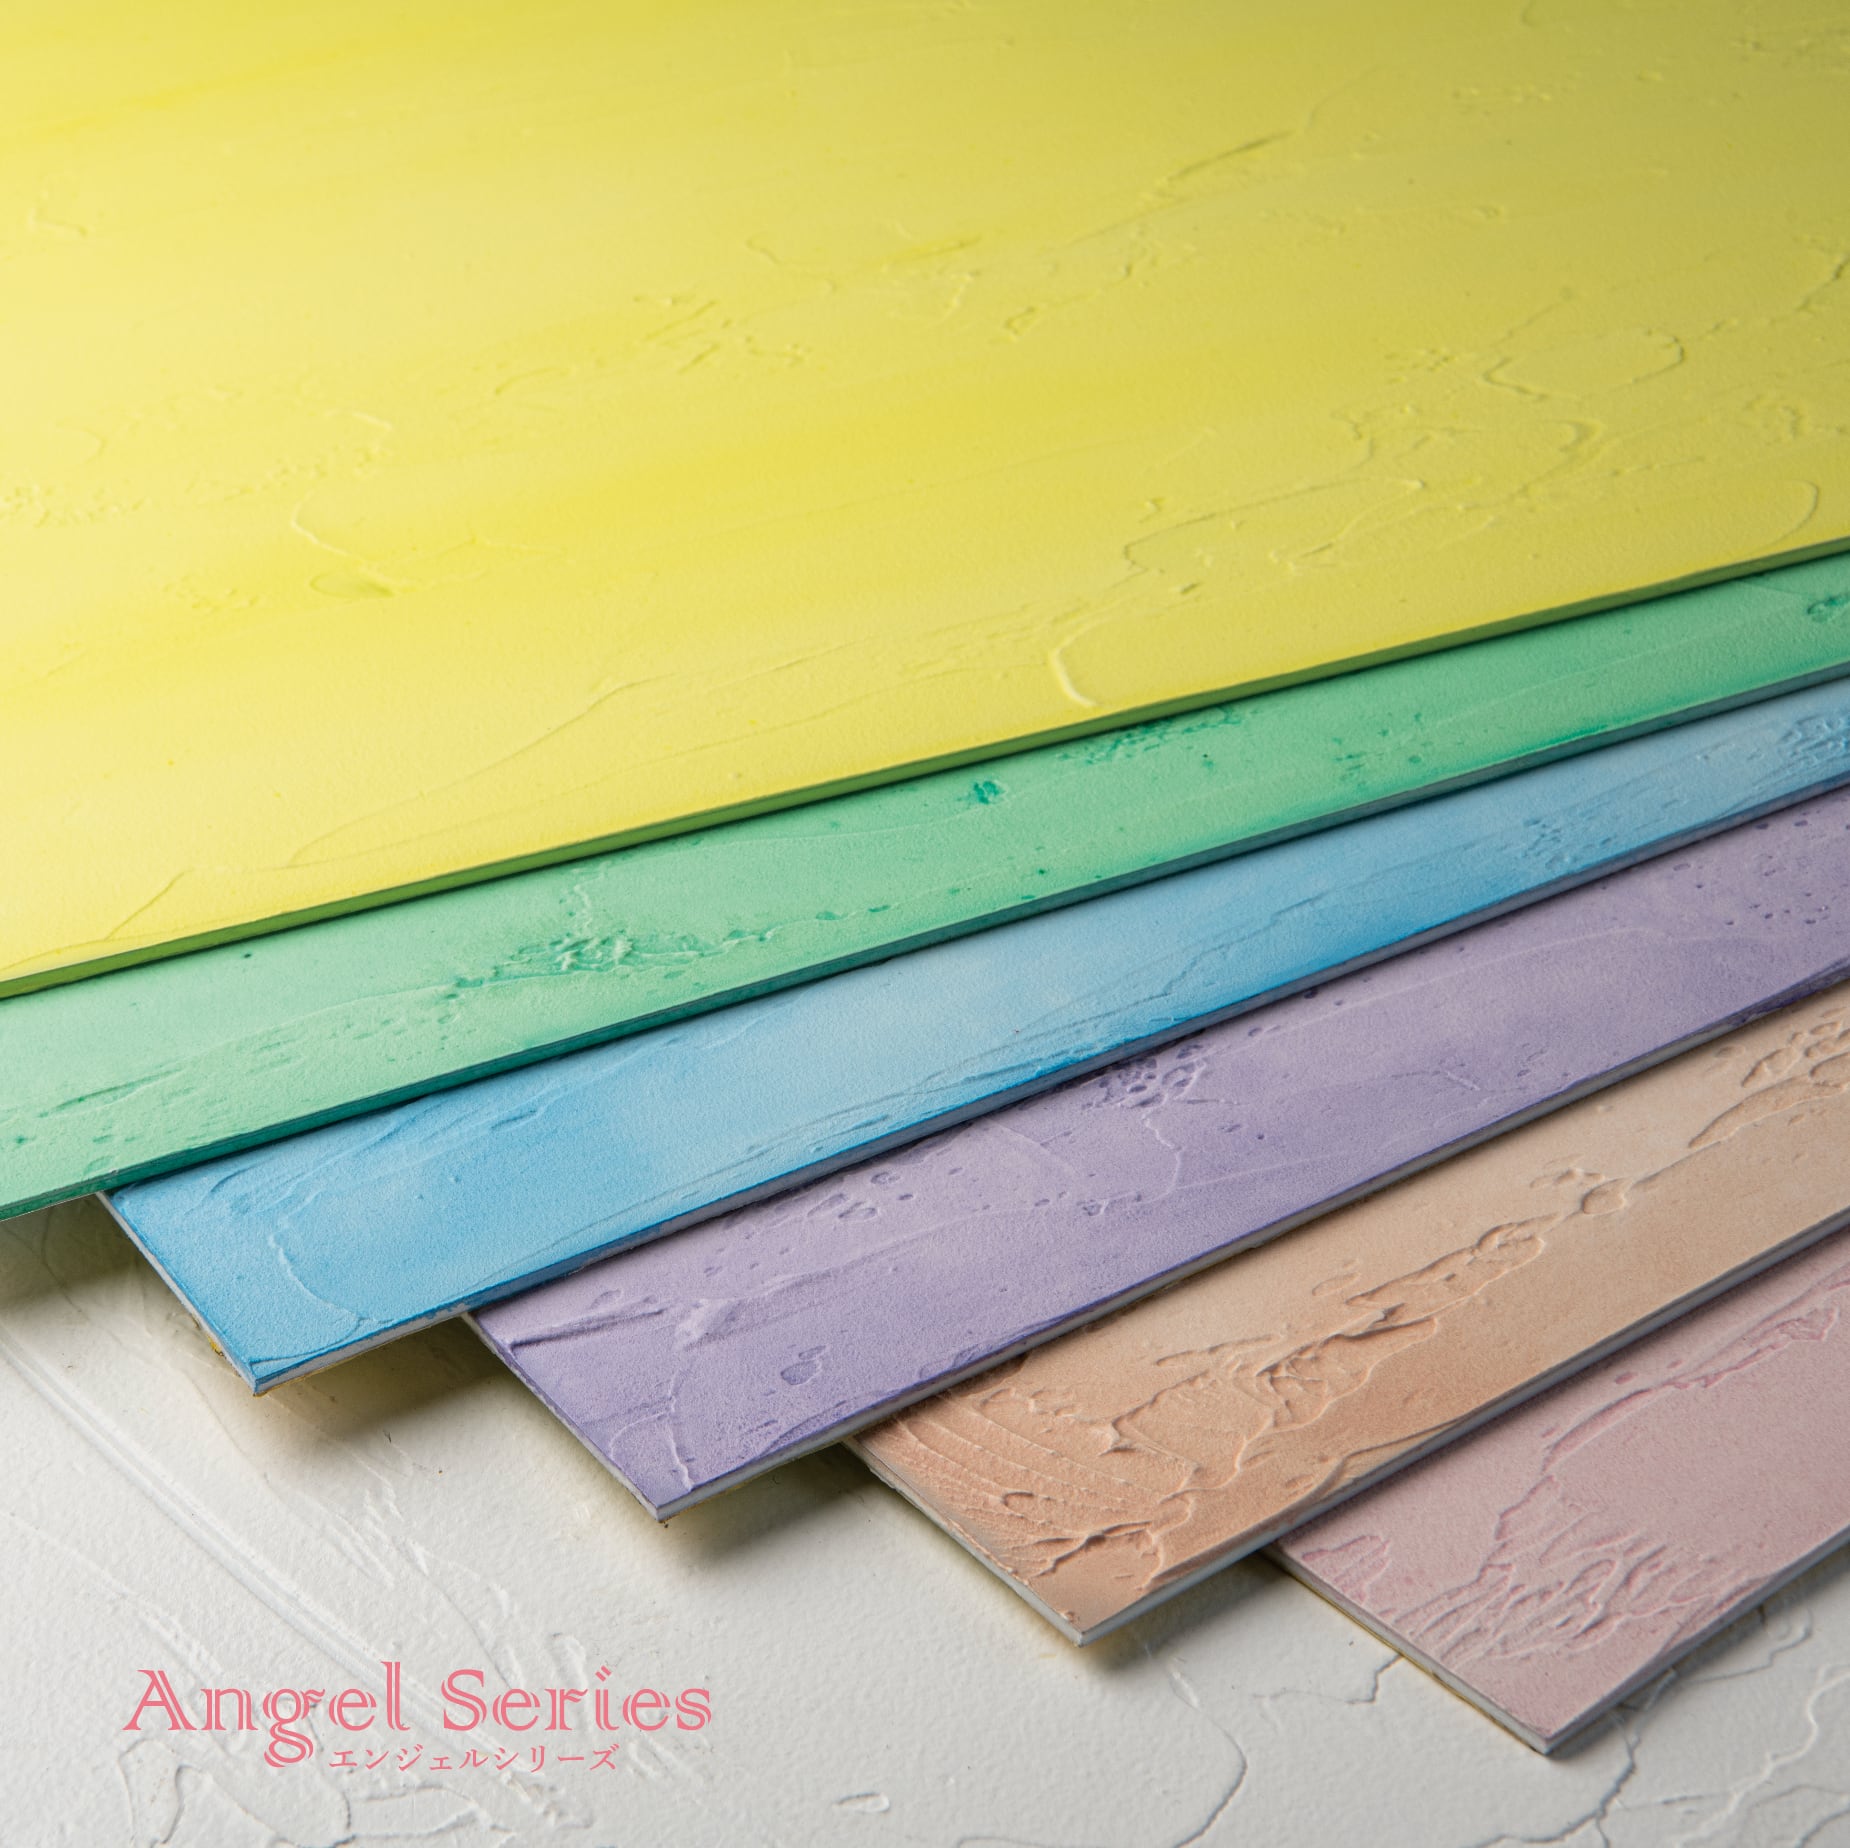 BAEL PHOTO BOARD PRO Angel Pastel color series〈ガブリエルパステルブルー〉